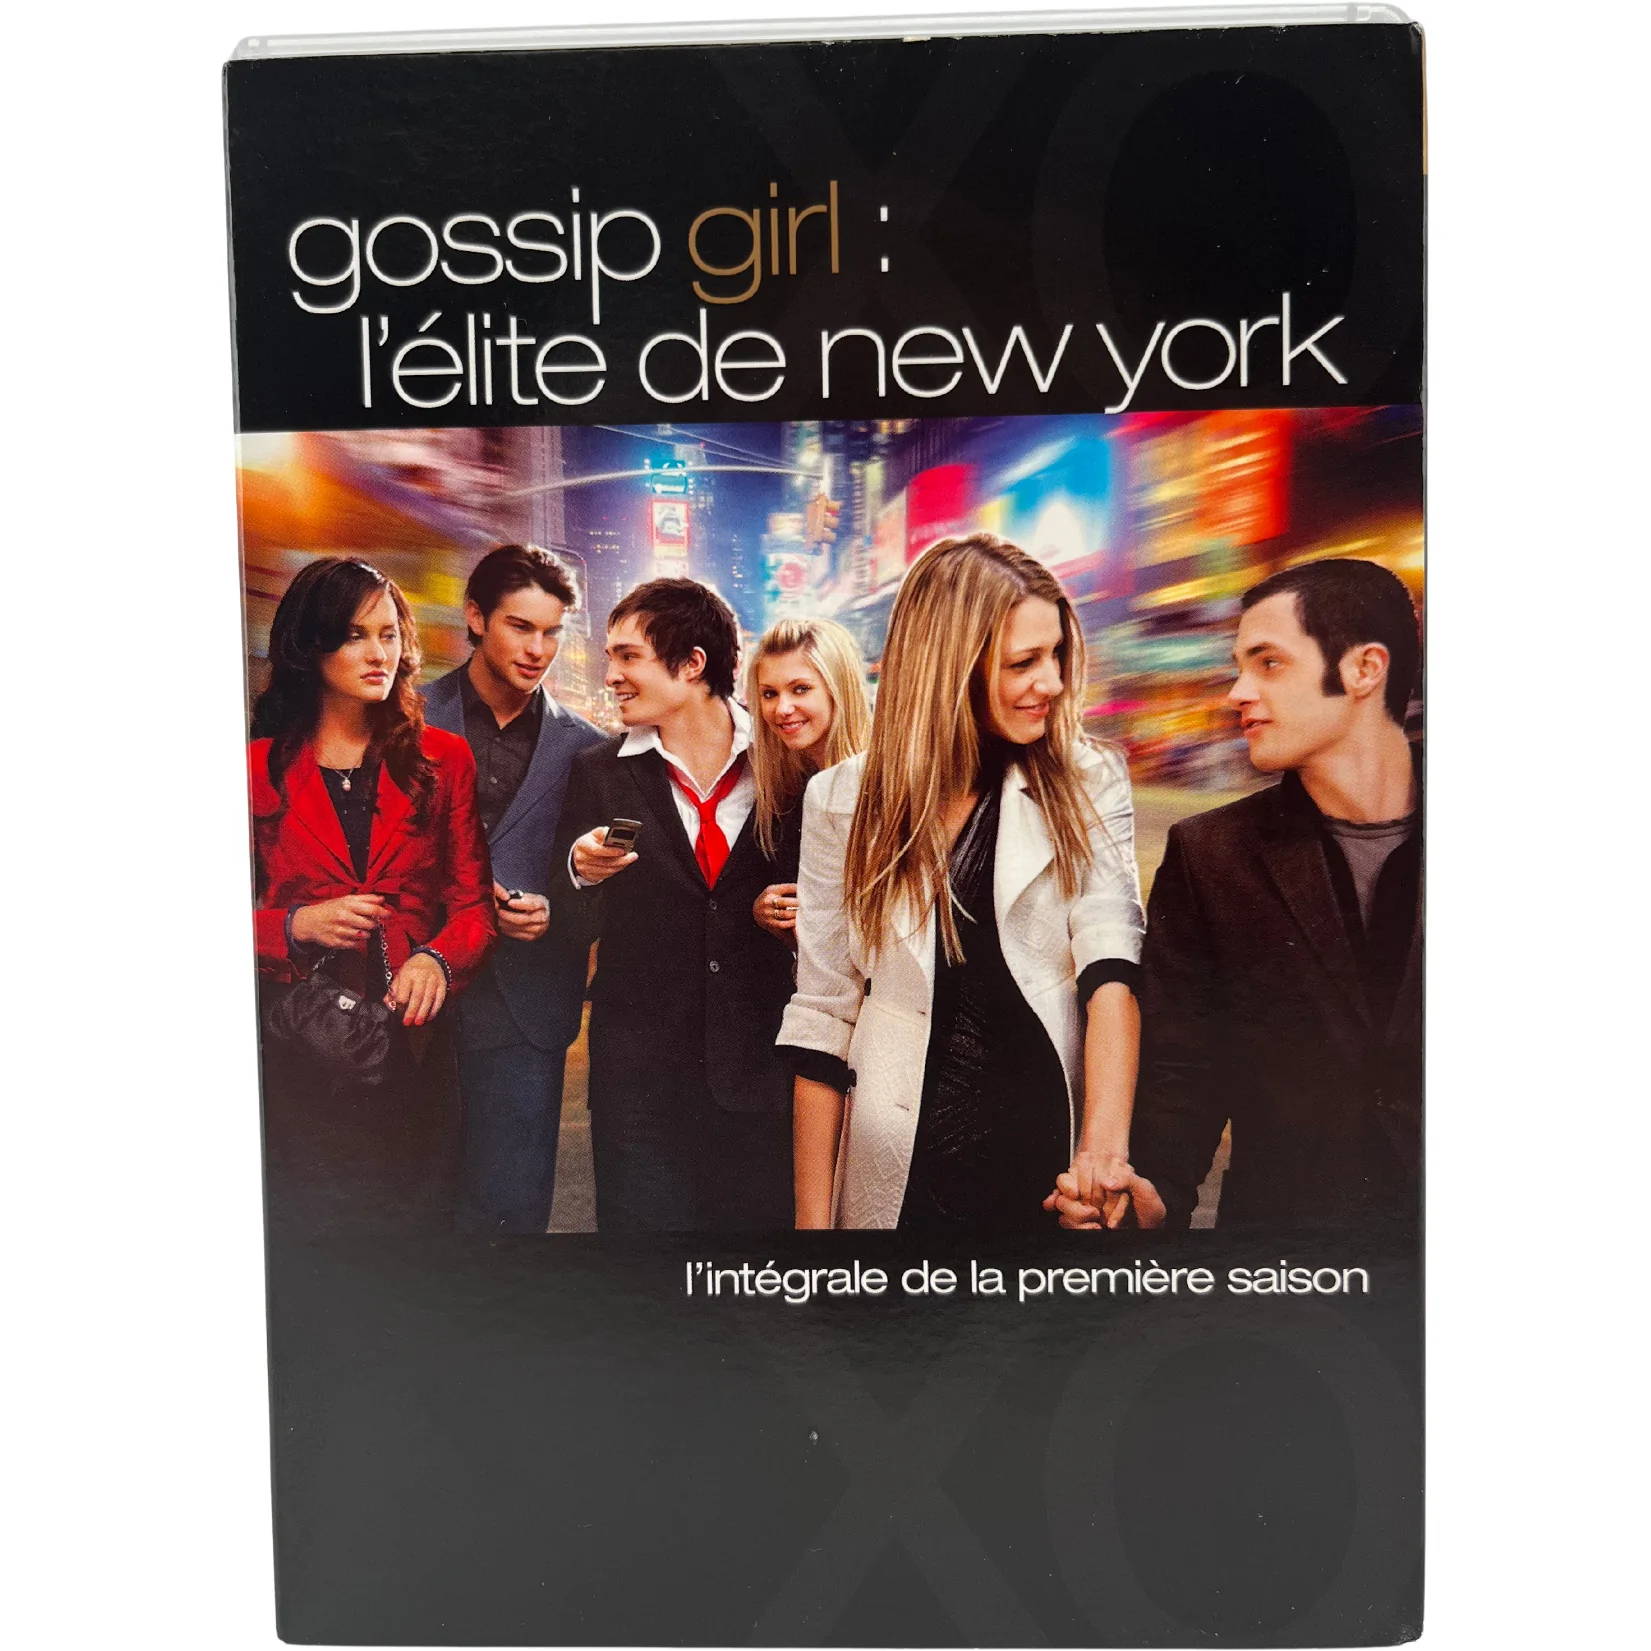 Gossip Girl TV Series / French Version / 1st Season / DVD